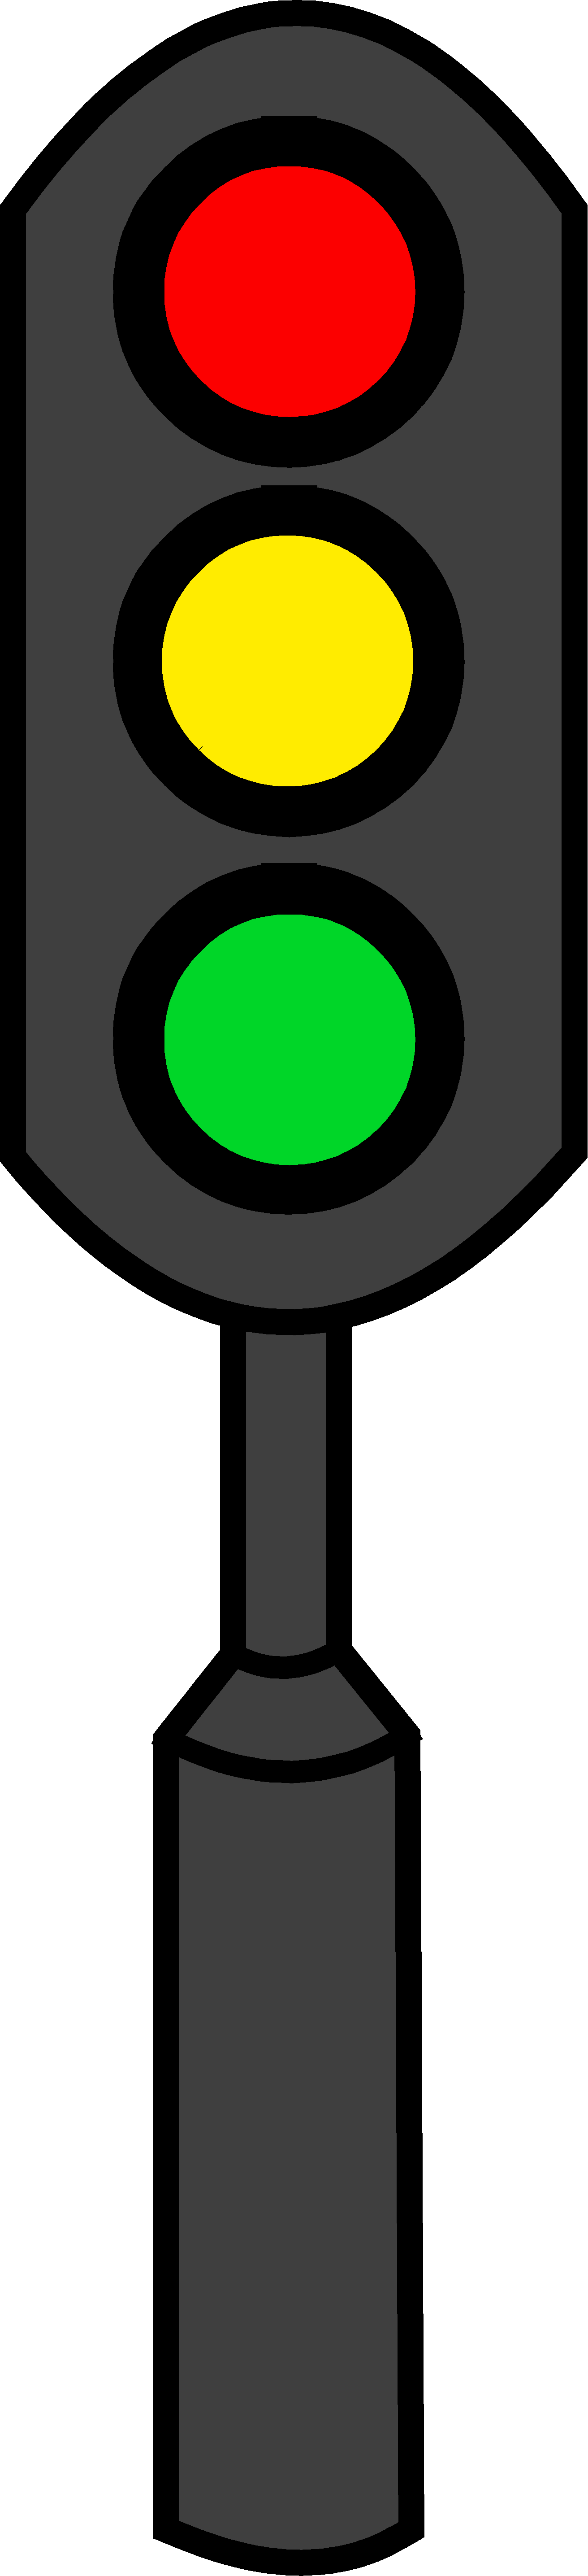 Green traffic light clipart kid 4 - FamClipart